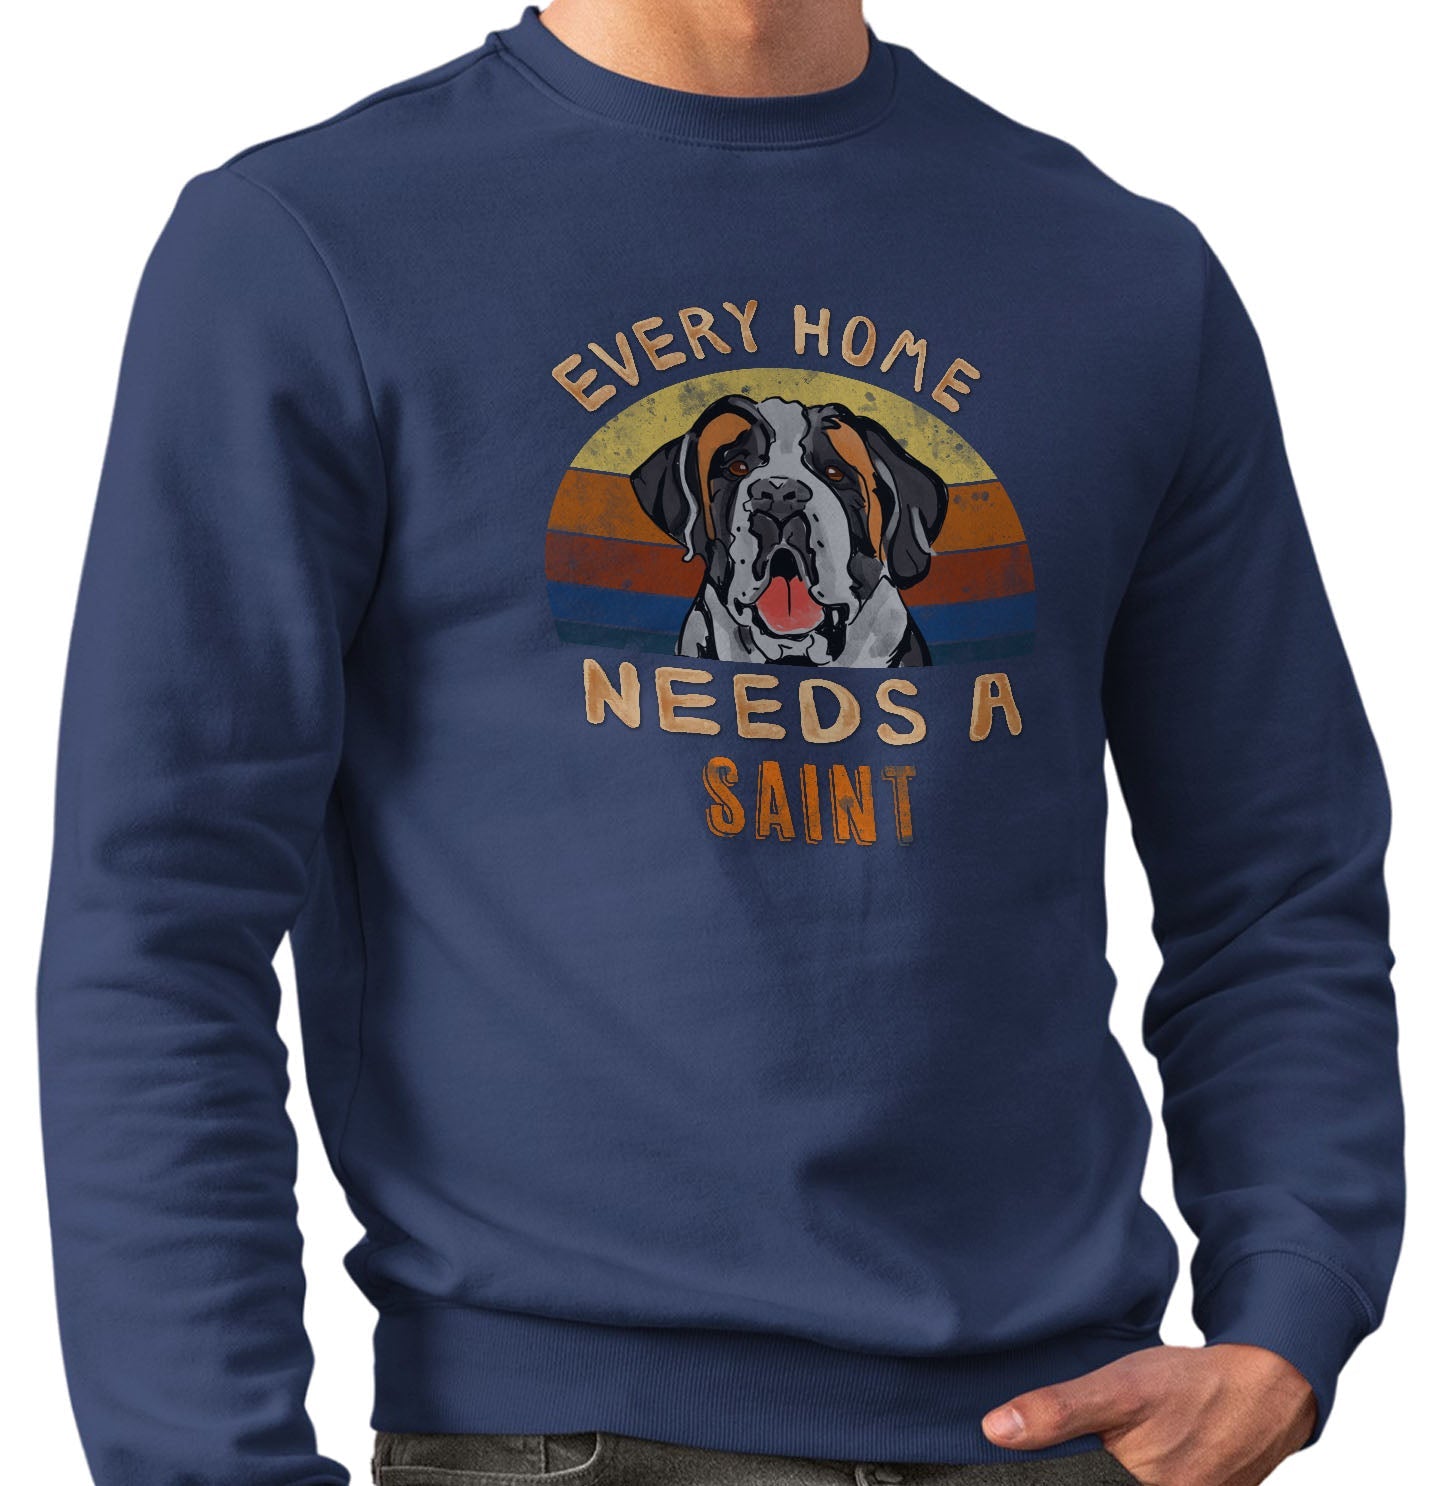 Every Home Needs a Saint Bernard - Adult Unisex Crewneck Sweatshirt